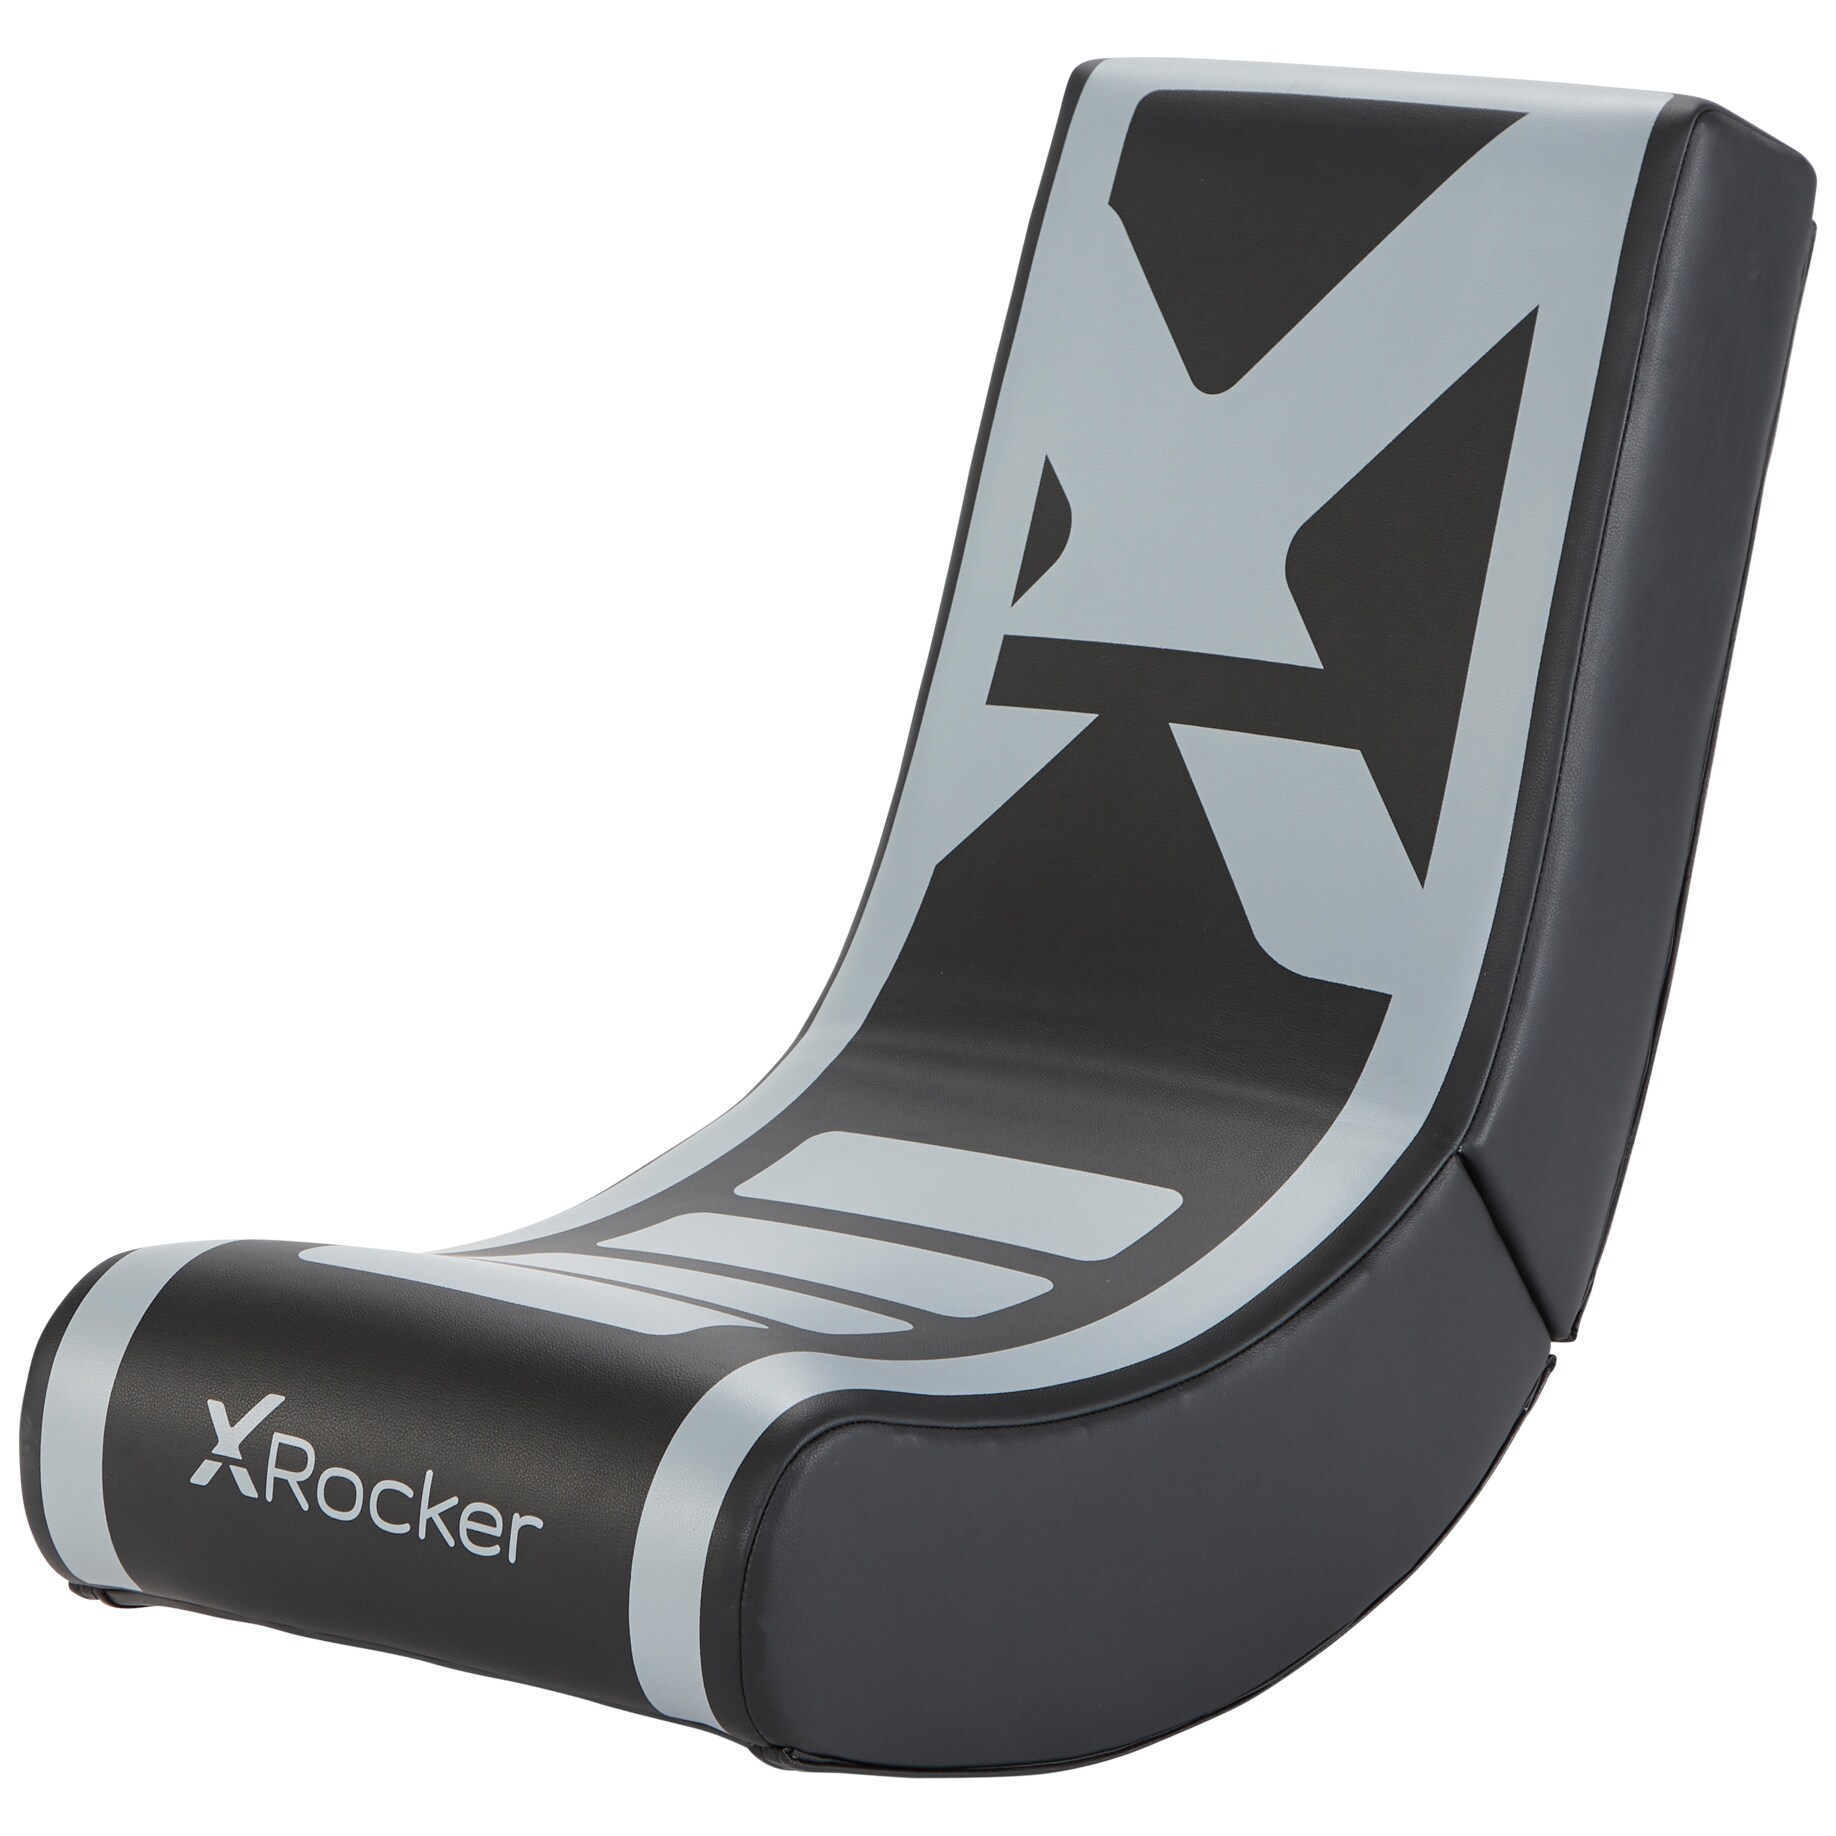 X Rocker® gamingstole med lyd - Elgiganten